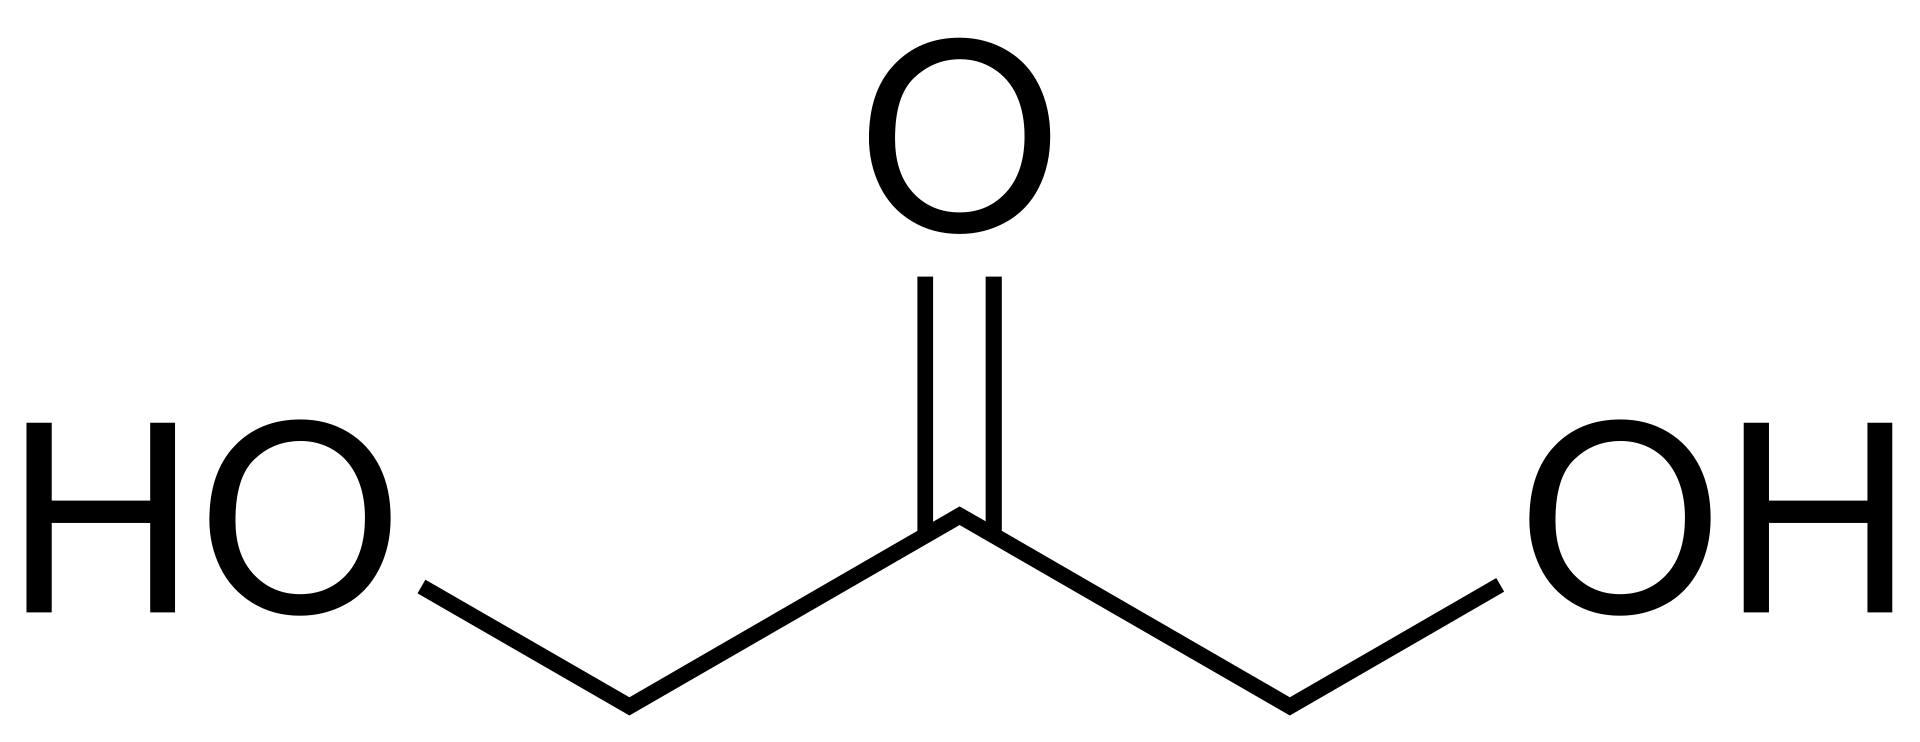 Skeletal formula of dihydroxyacetone